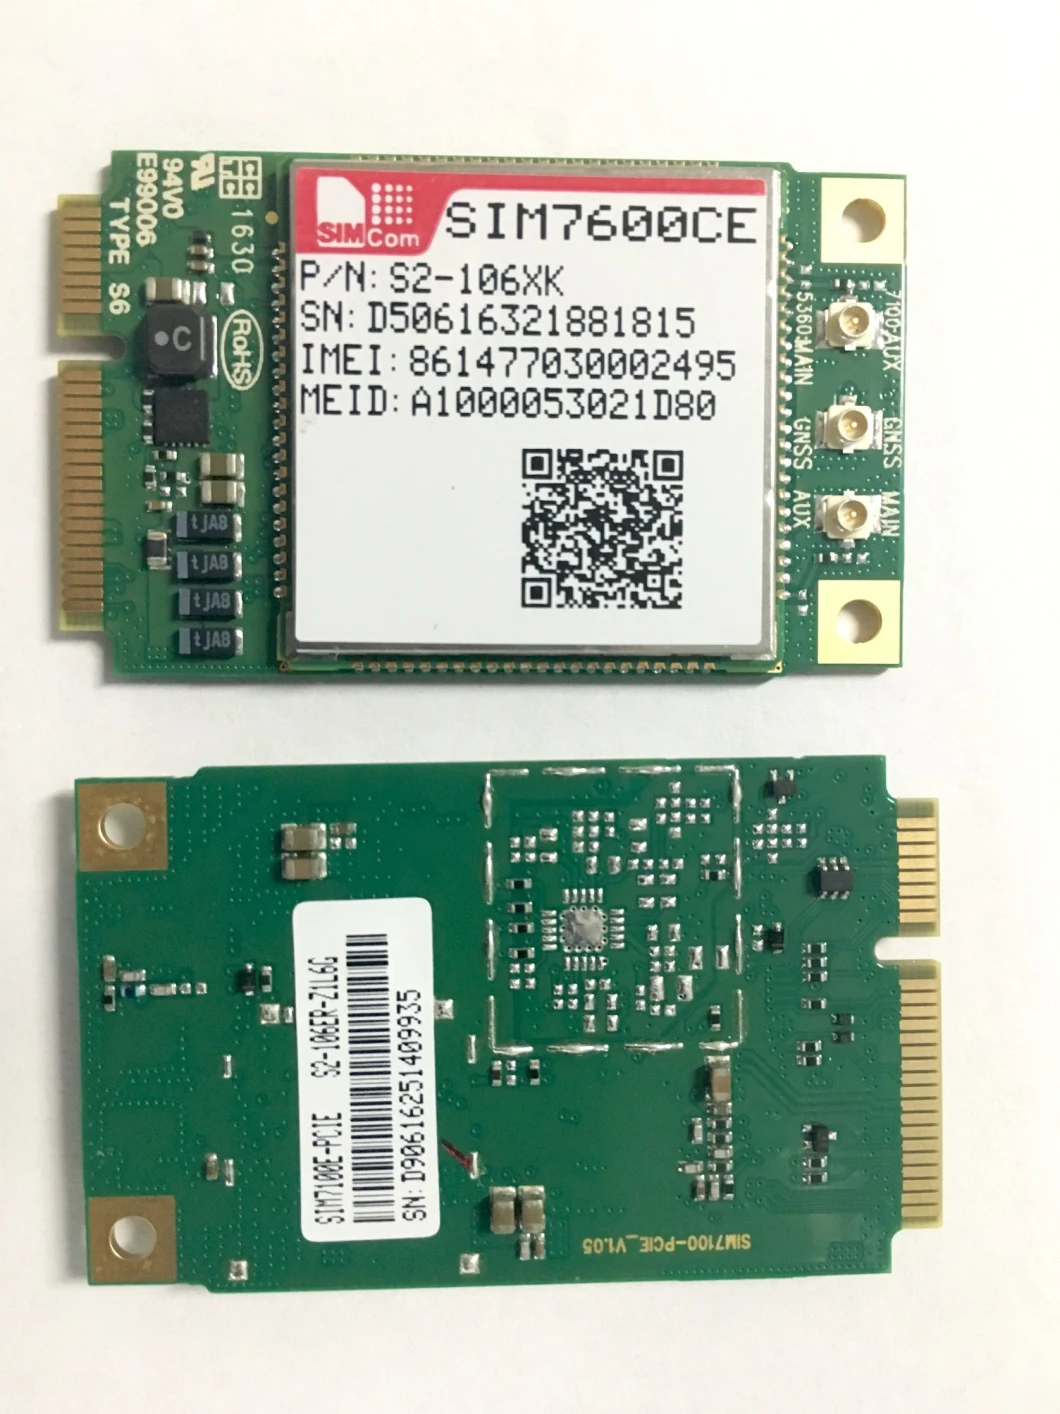 Simcom 4G Lte Module SIM7600ce Support Lte-Tdd/Lte-FDD/HSPA+ and GSM/GPRS/Edge